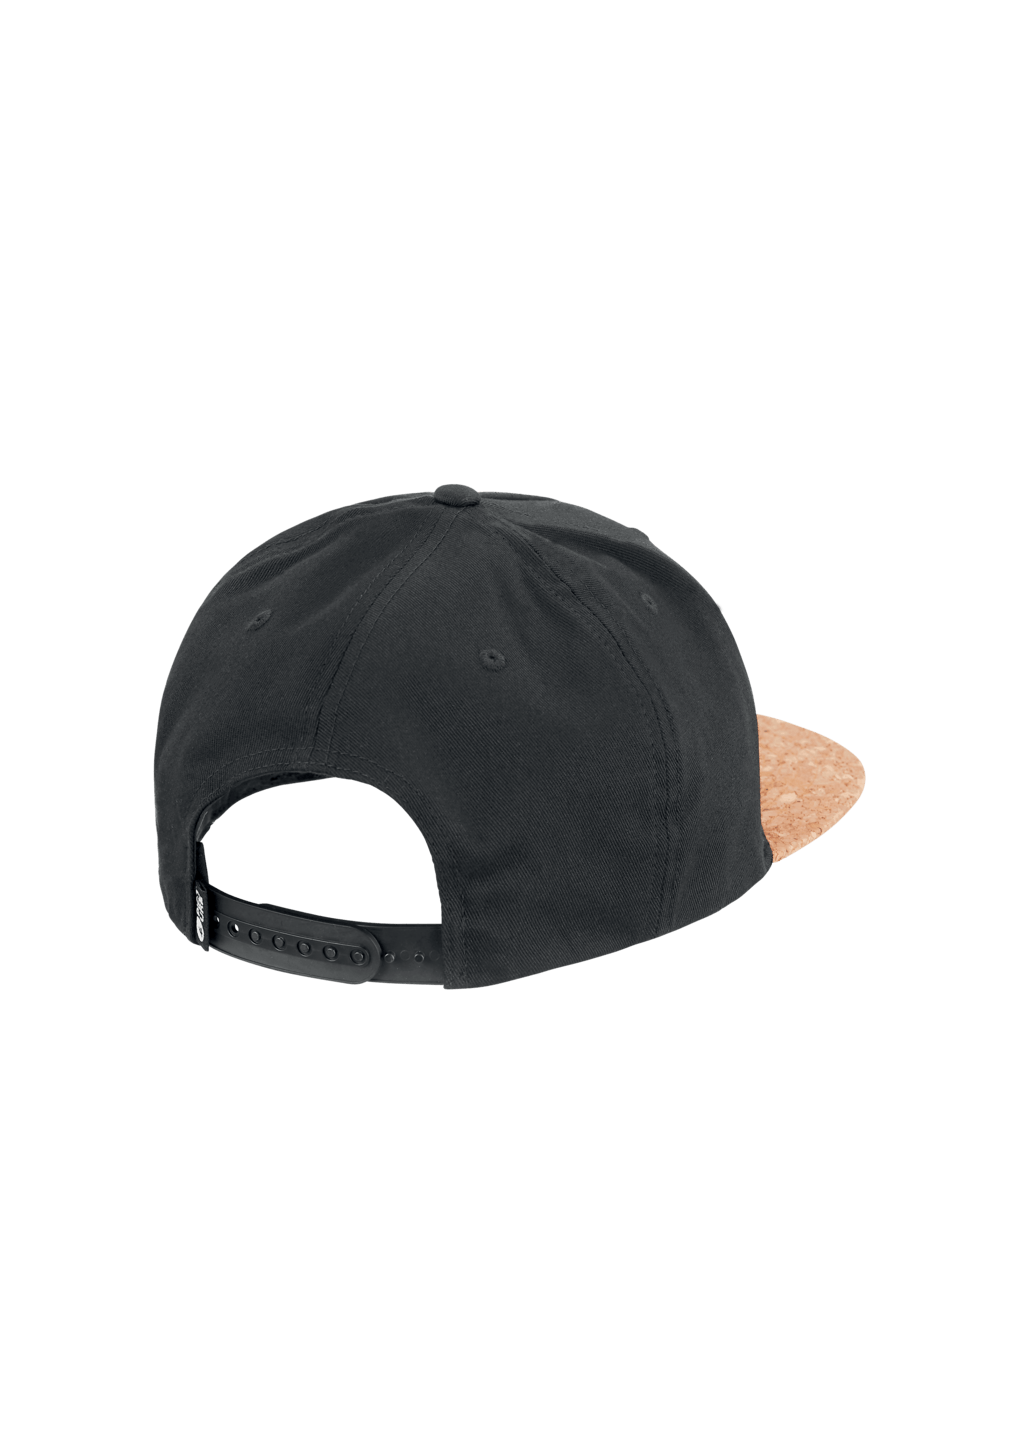 Casquette Narrow Cap - Black - Picture face